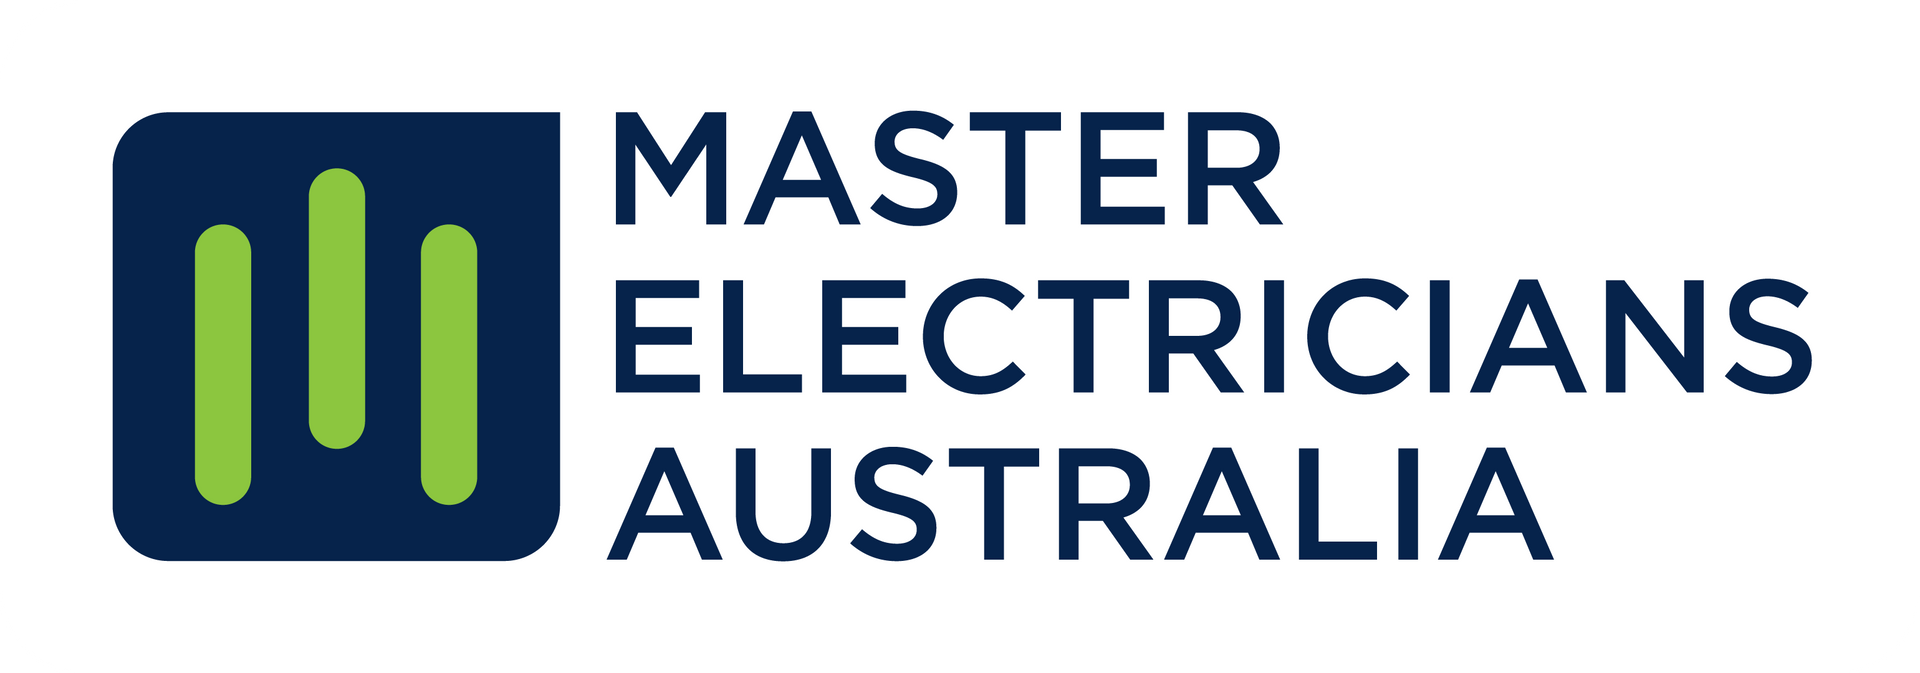 Master Electrician Australia